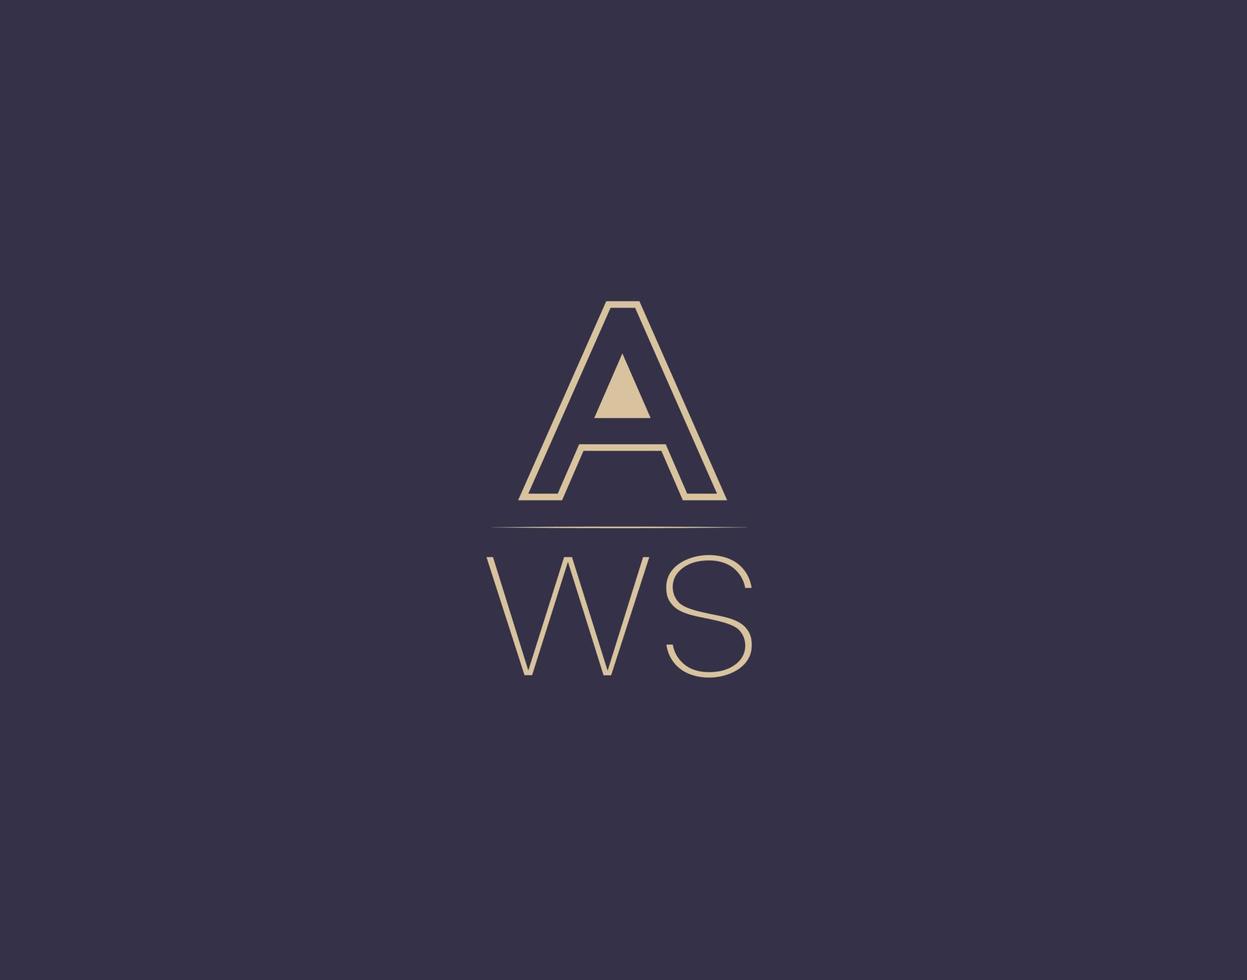 aws brief logo ontwerp modern minimalistische vector afbeeldingen